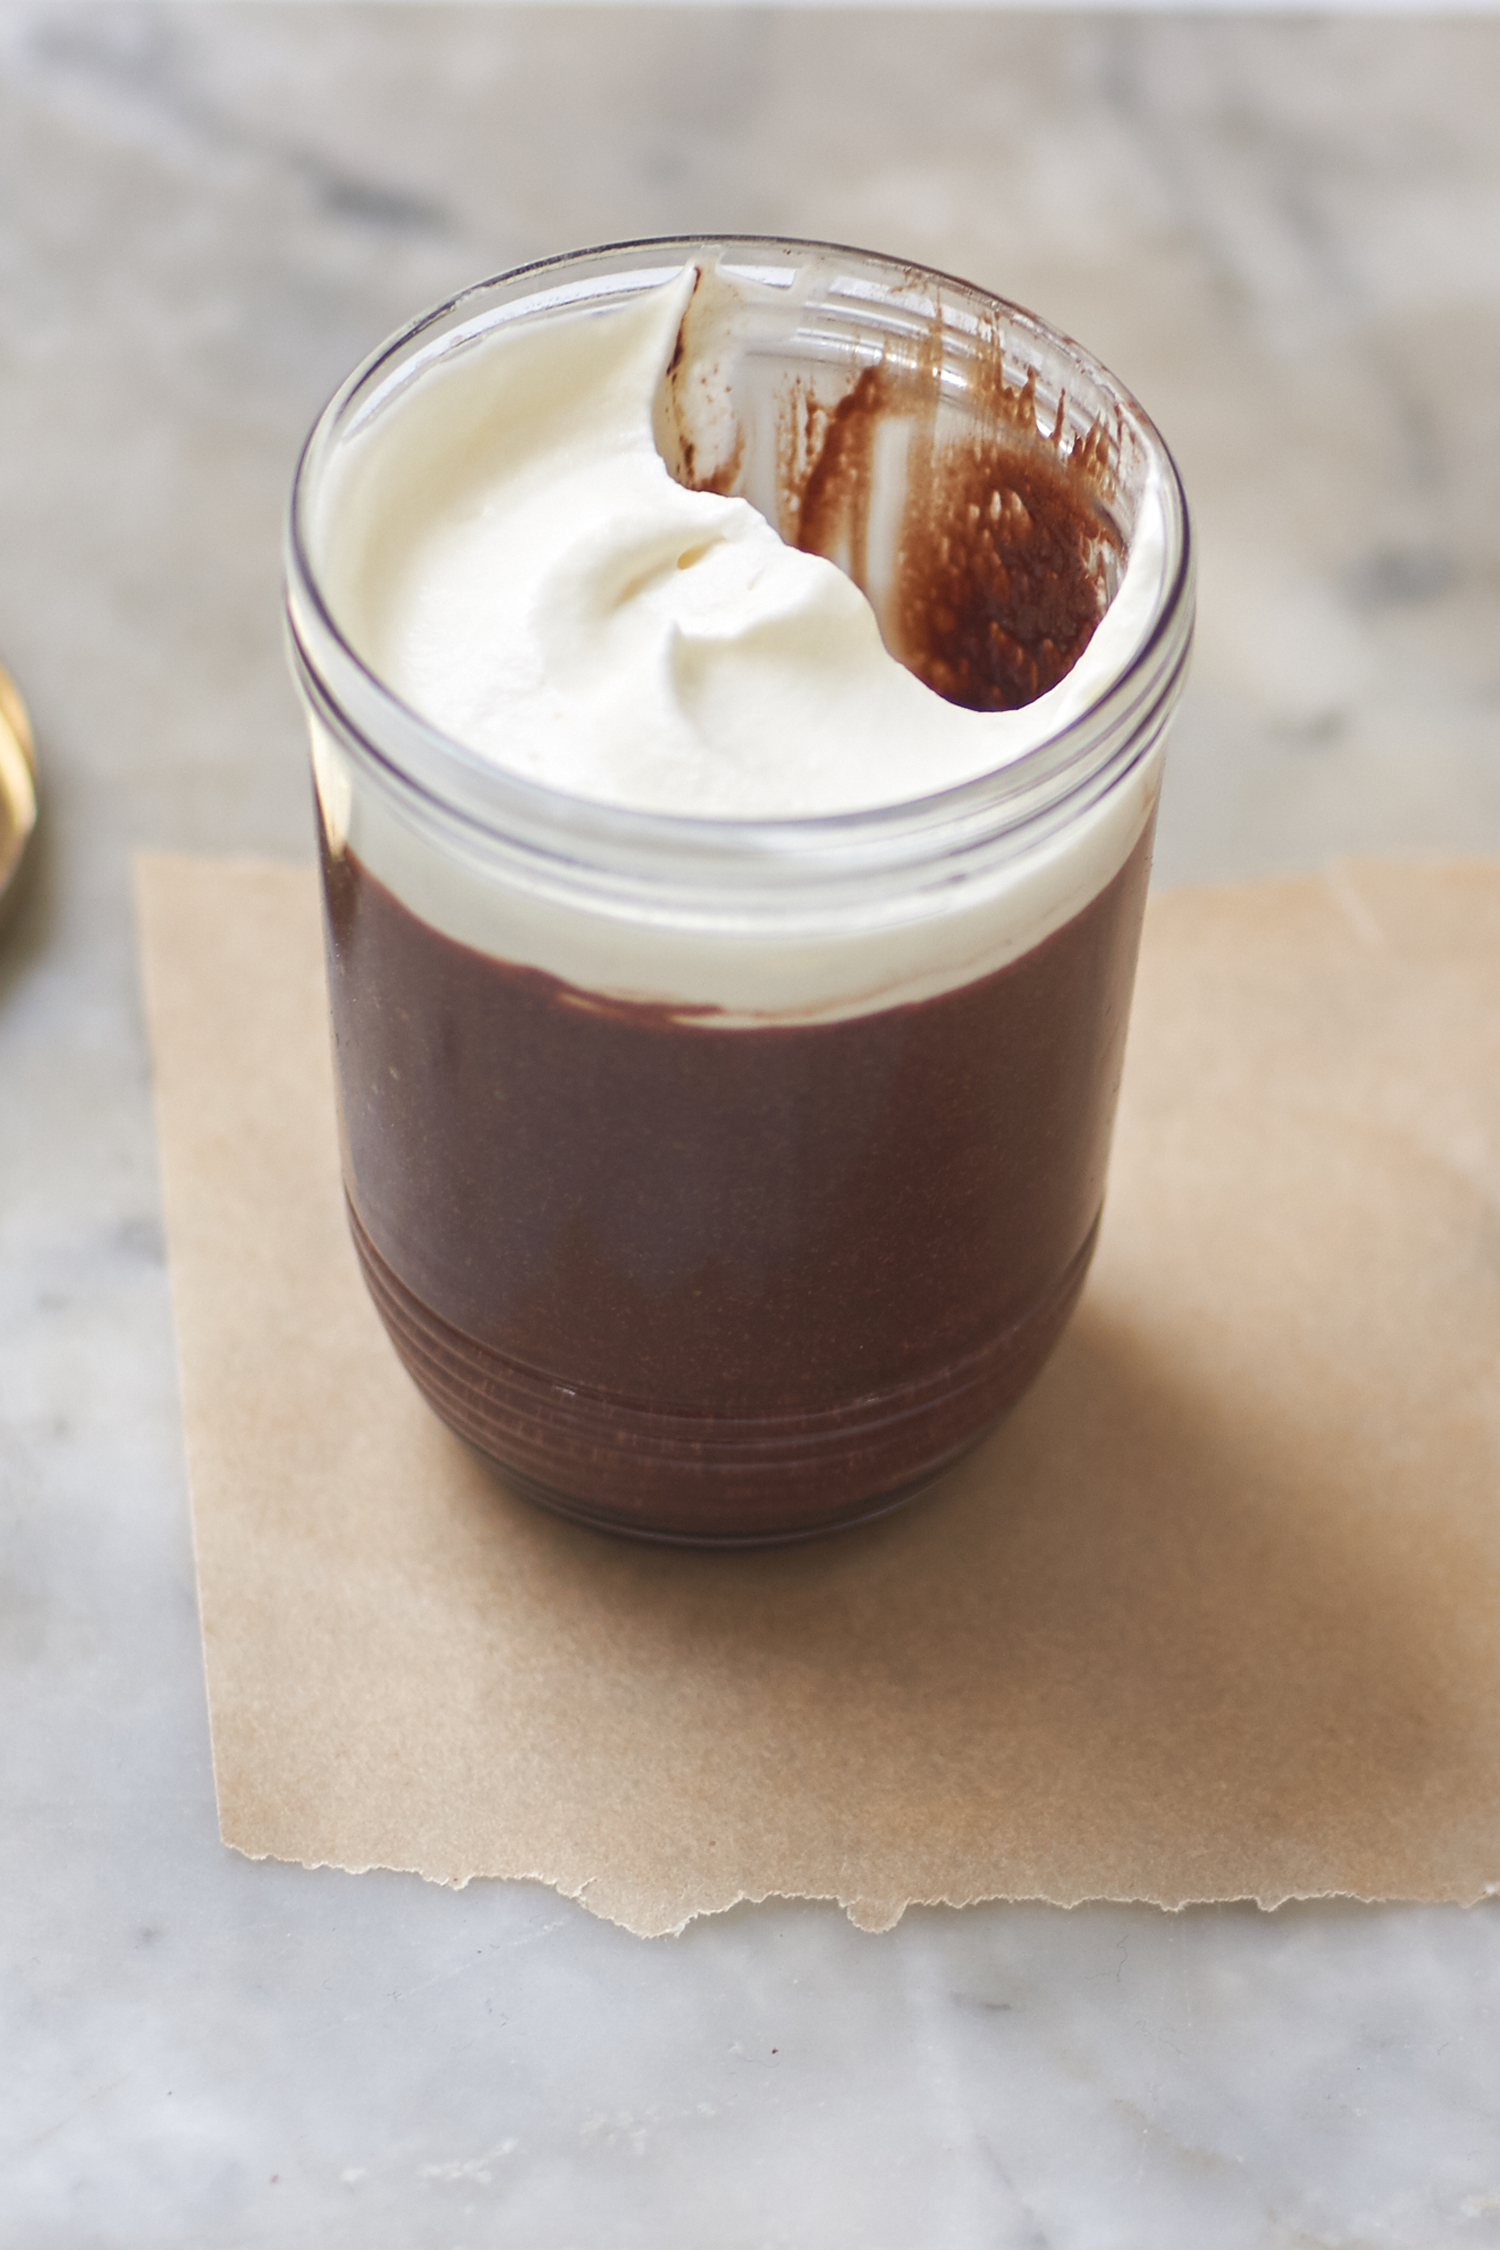 A Ridiculously Good Chocolate Pudding | 101 Cookbooks